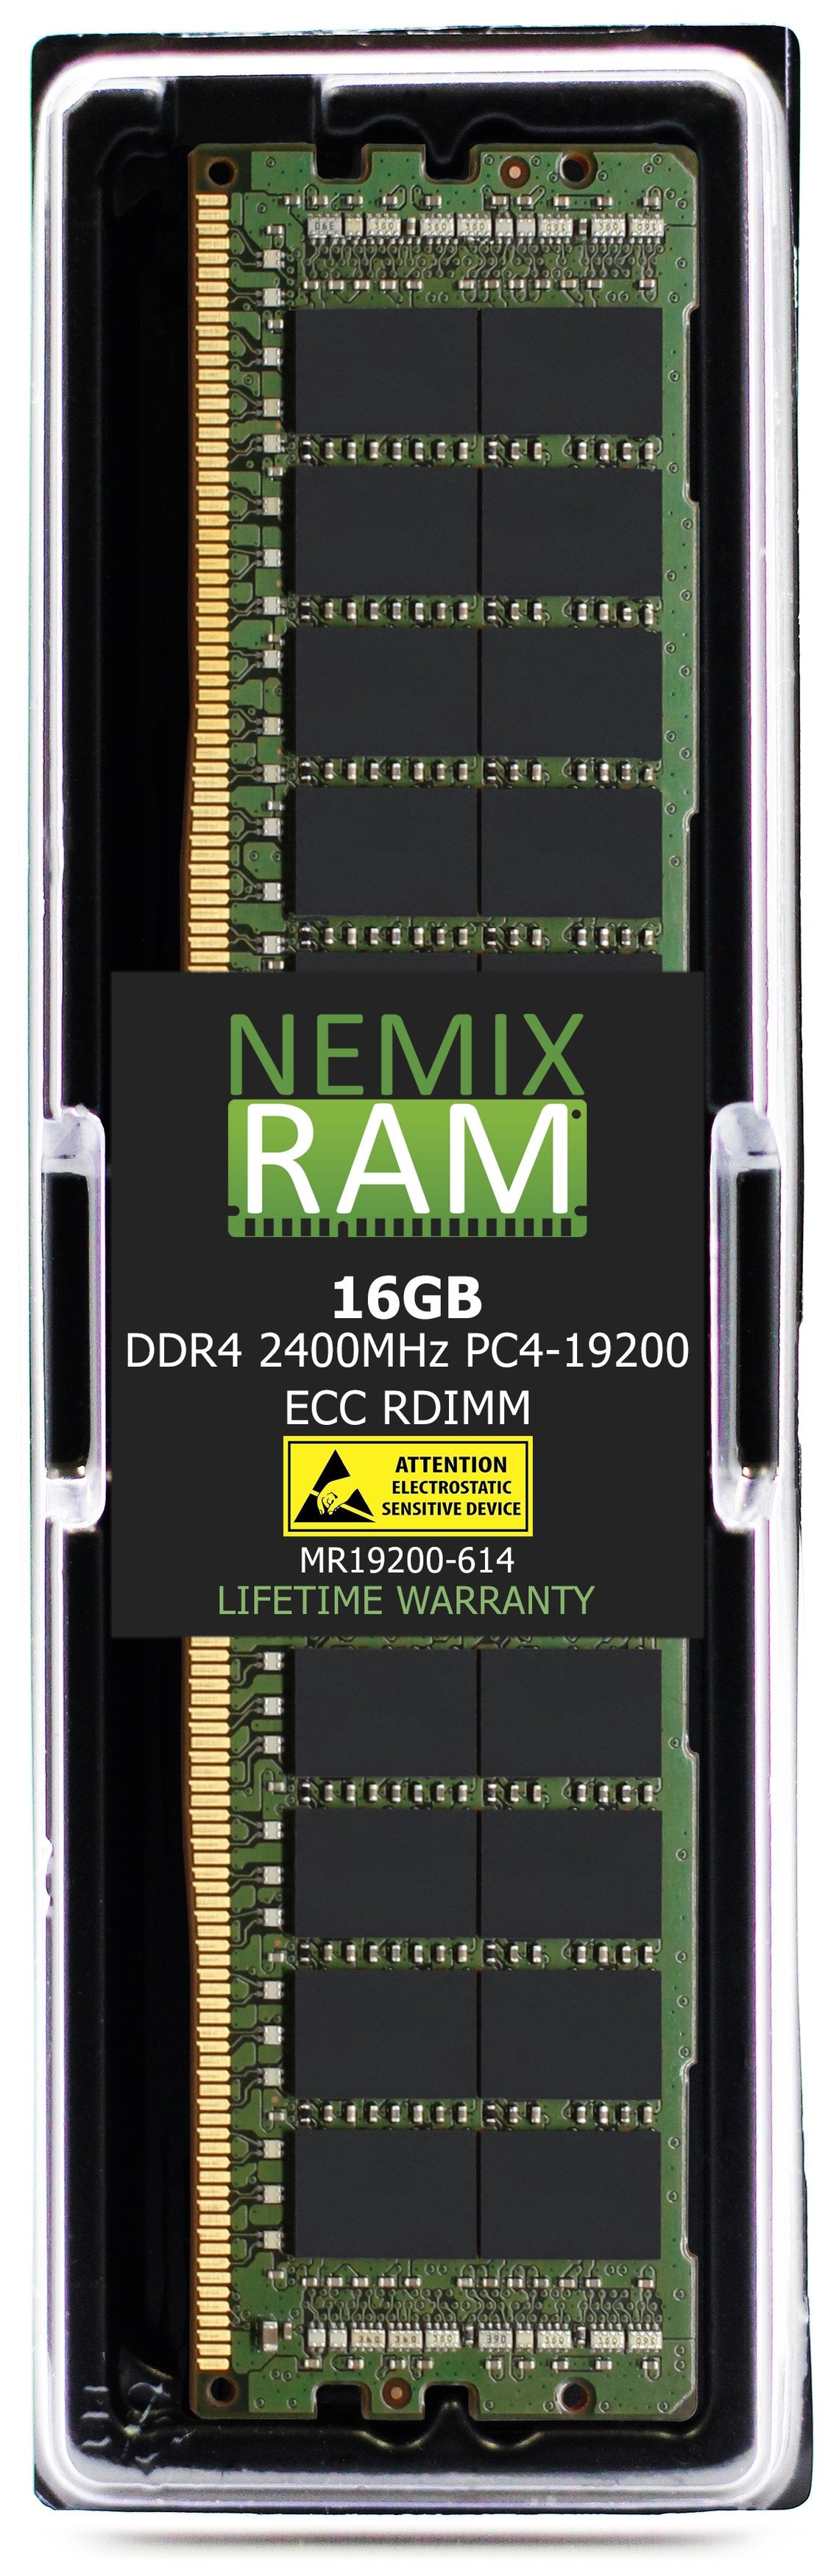 16GB DDR4 2400MHZ PC4-19200 RDIMM Compatible with Supermicro MEM-DR416L-HL04-ER24